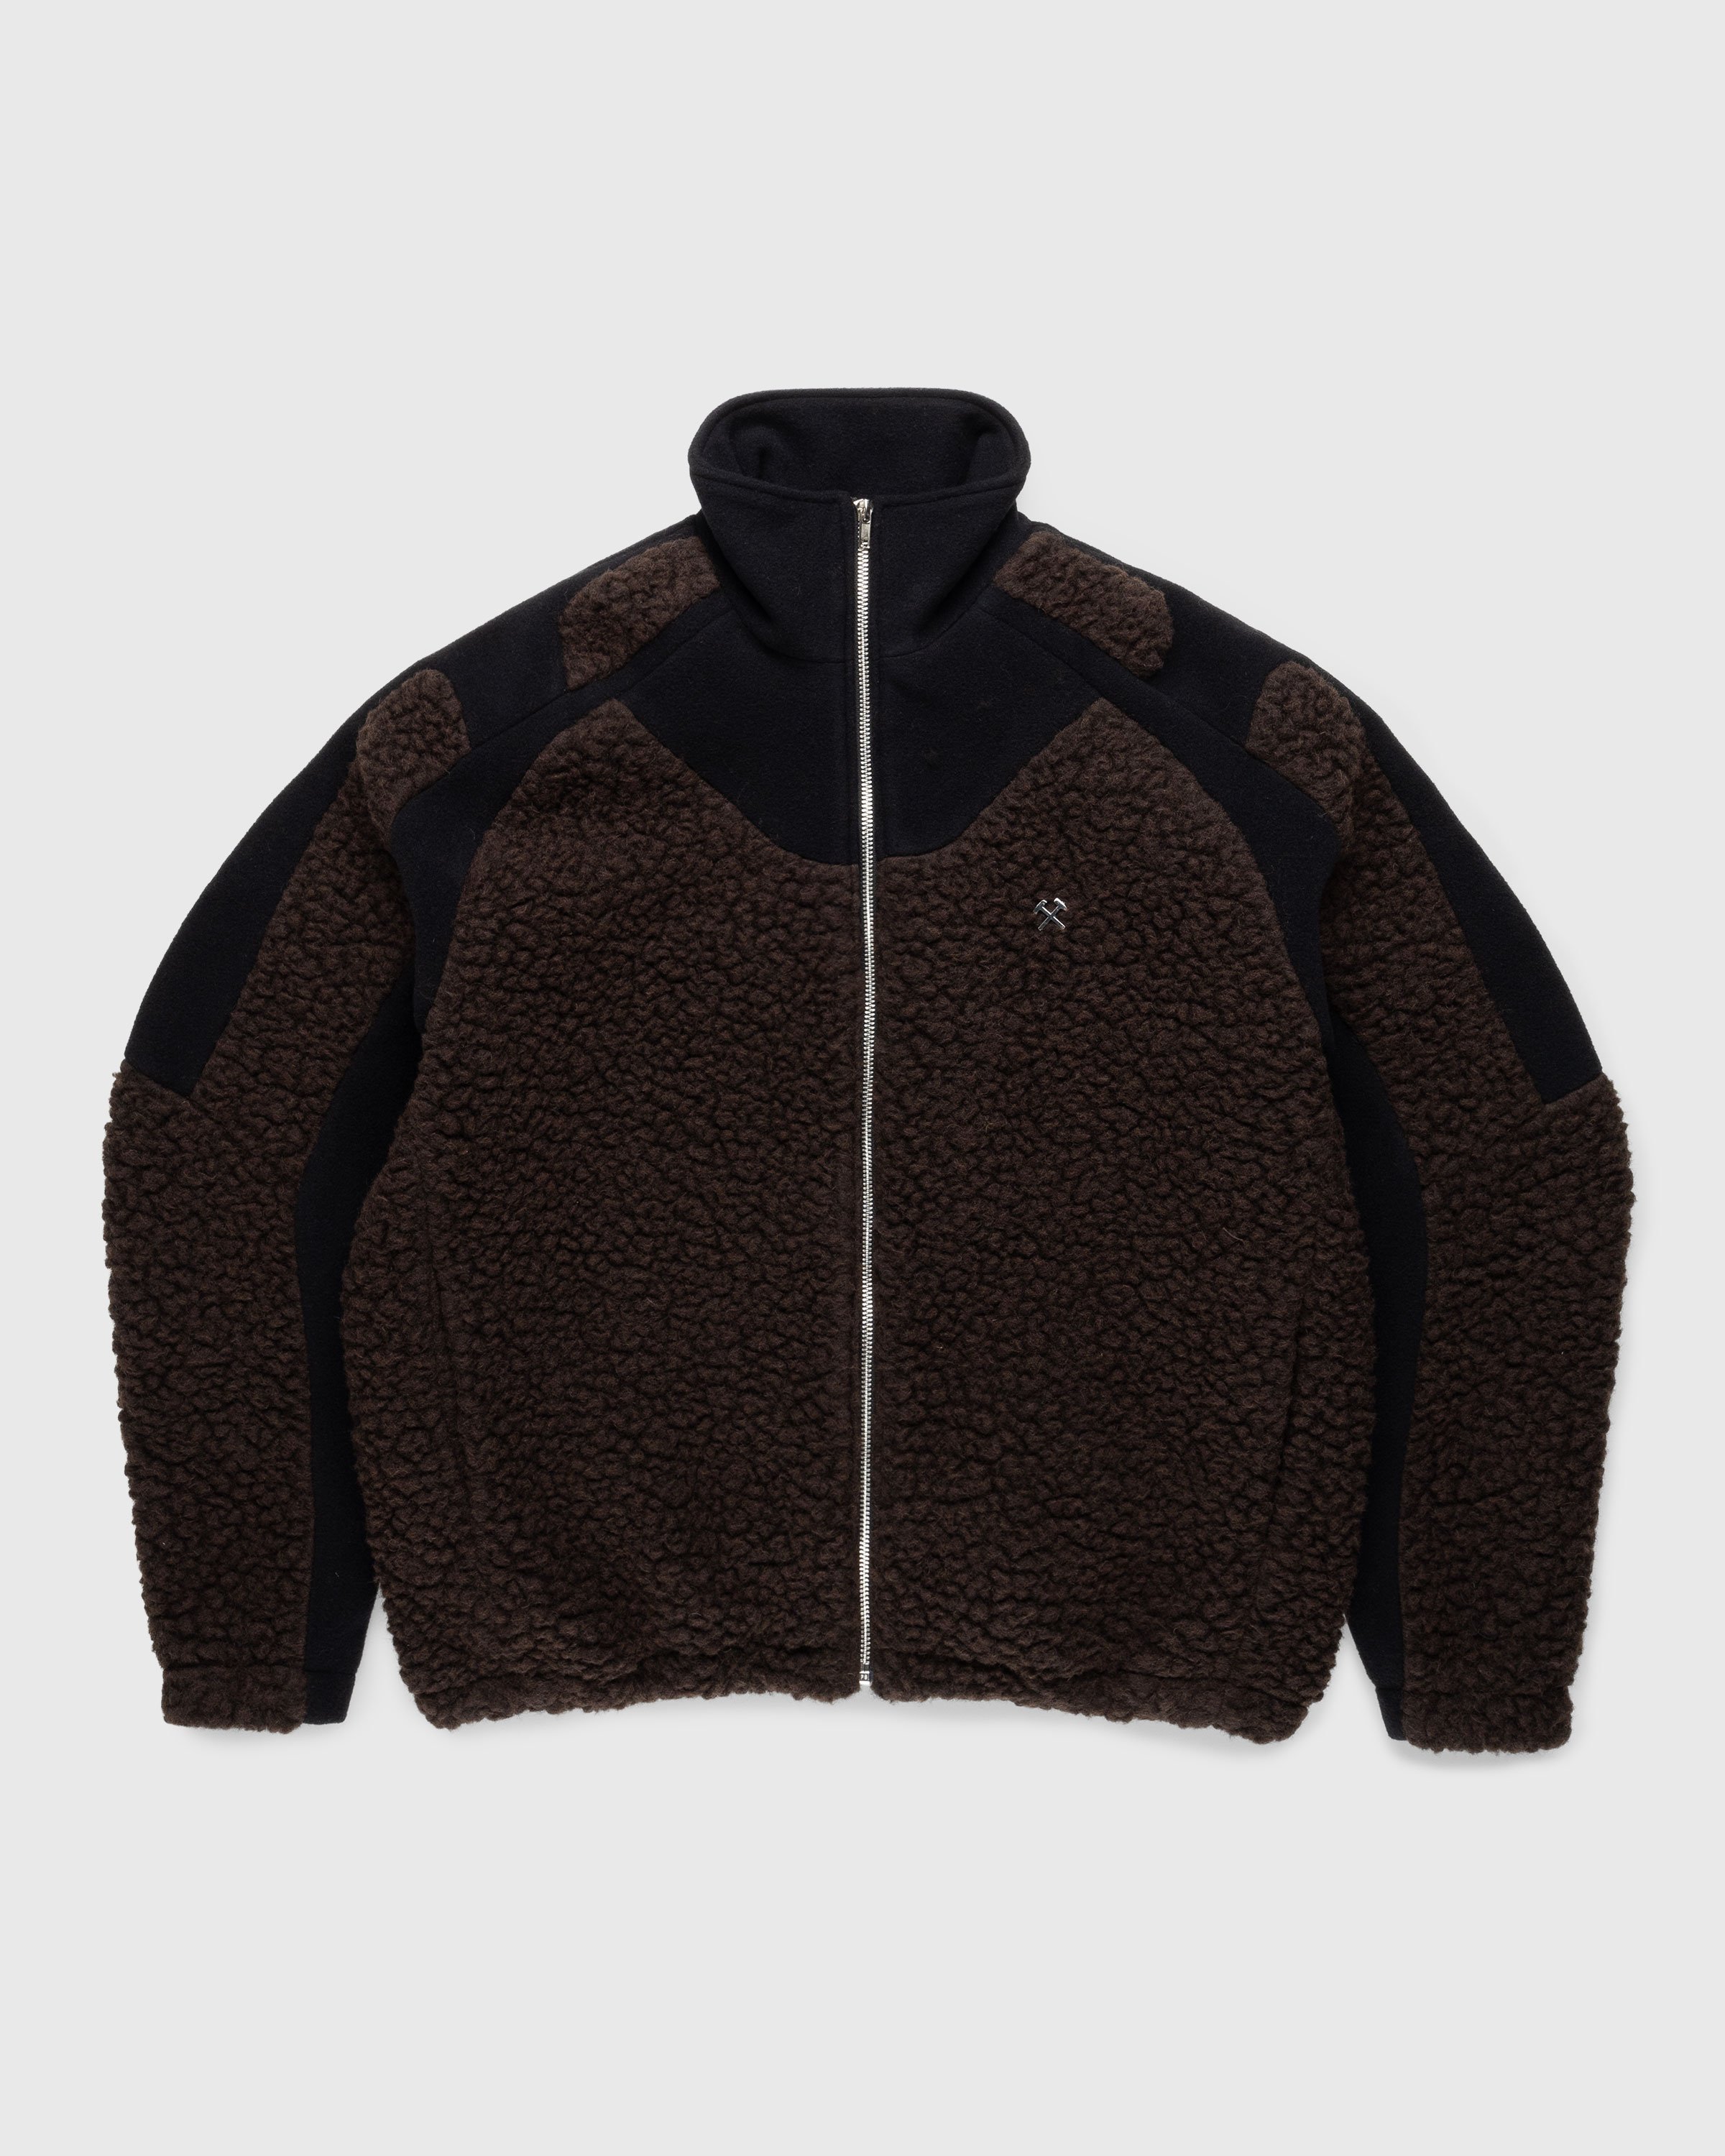 GmbH - Ercan Fleece Jacket Black/Brown - Clothing - Multi - Image 1